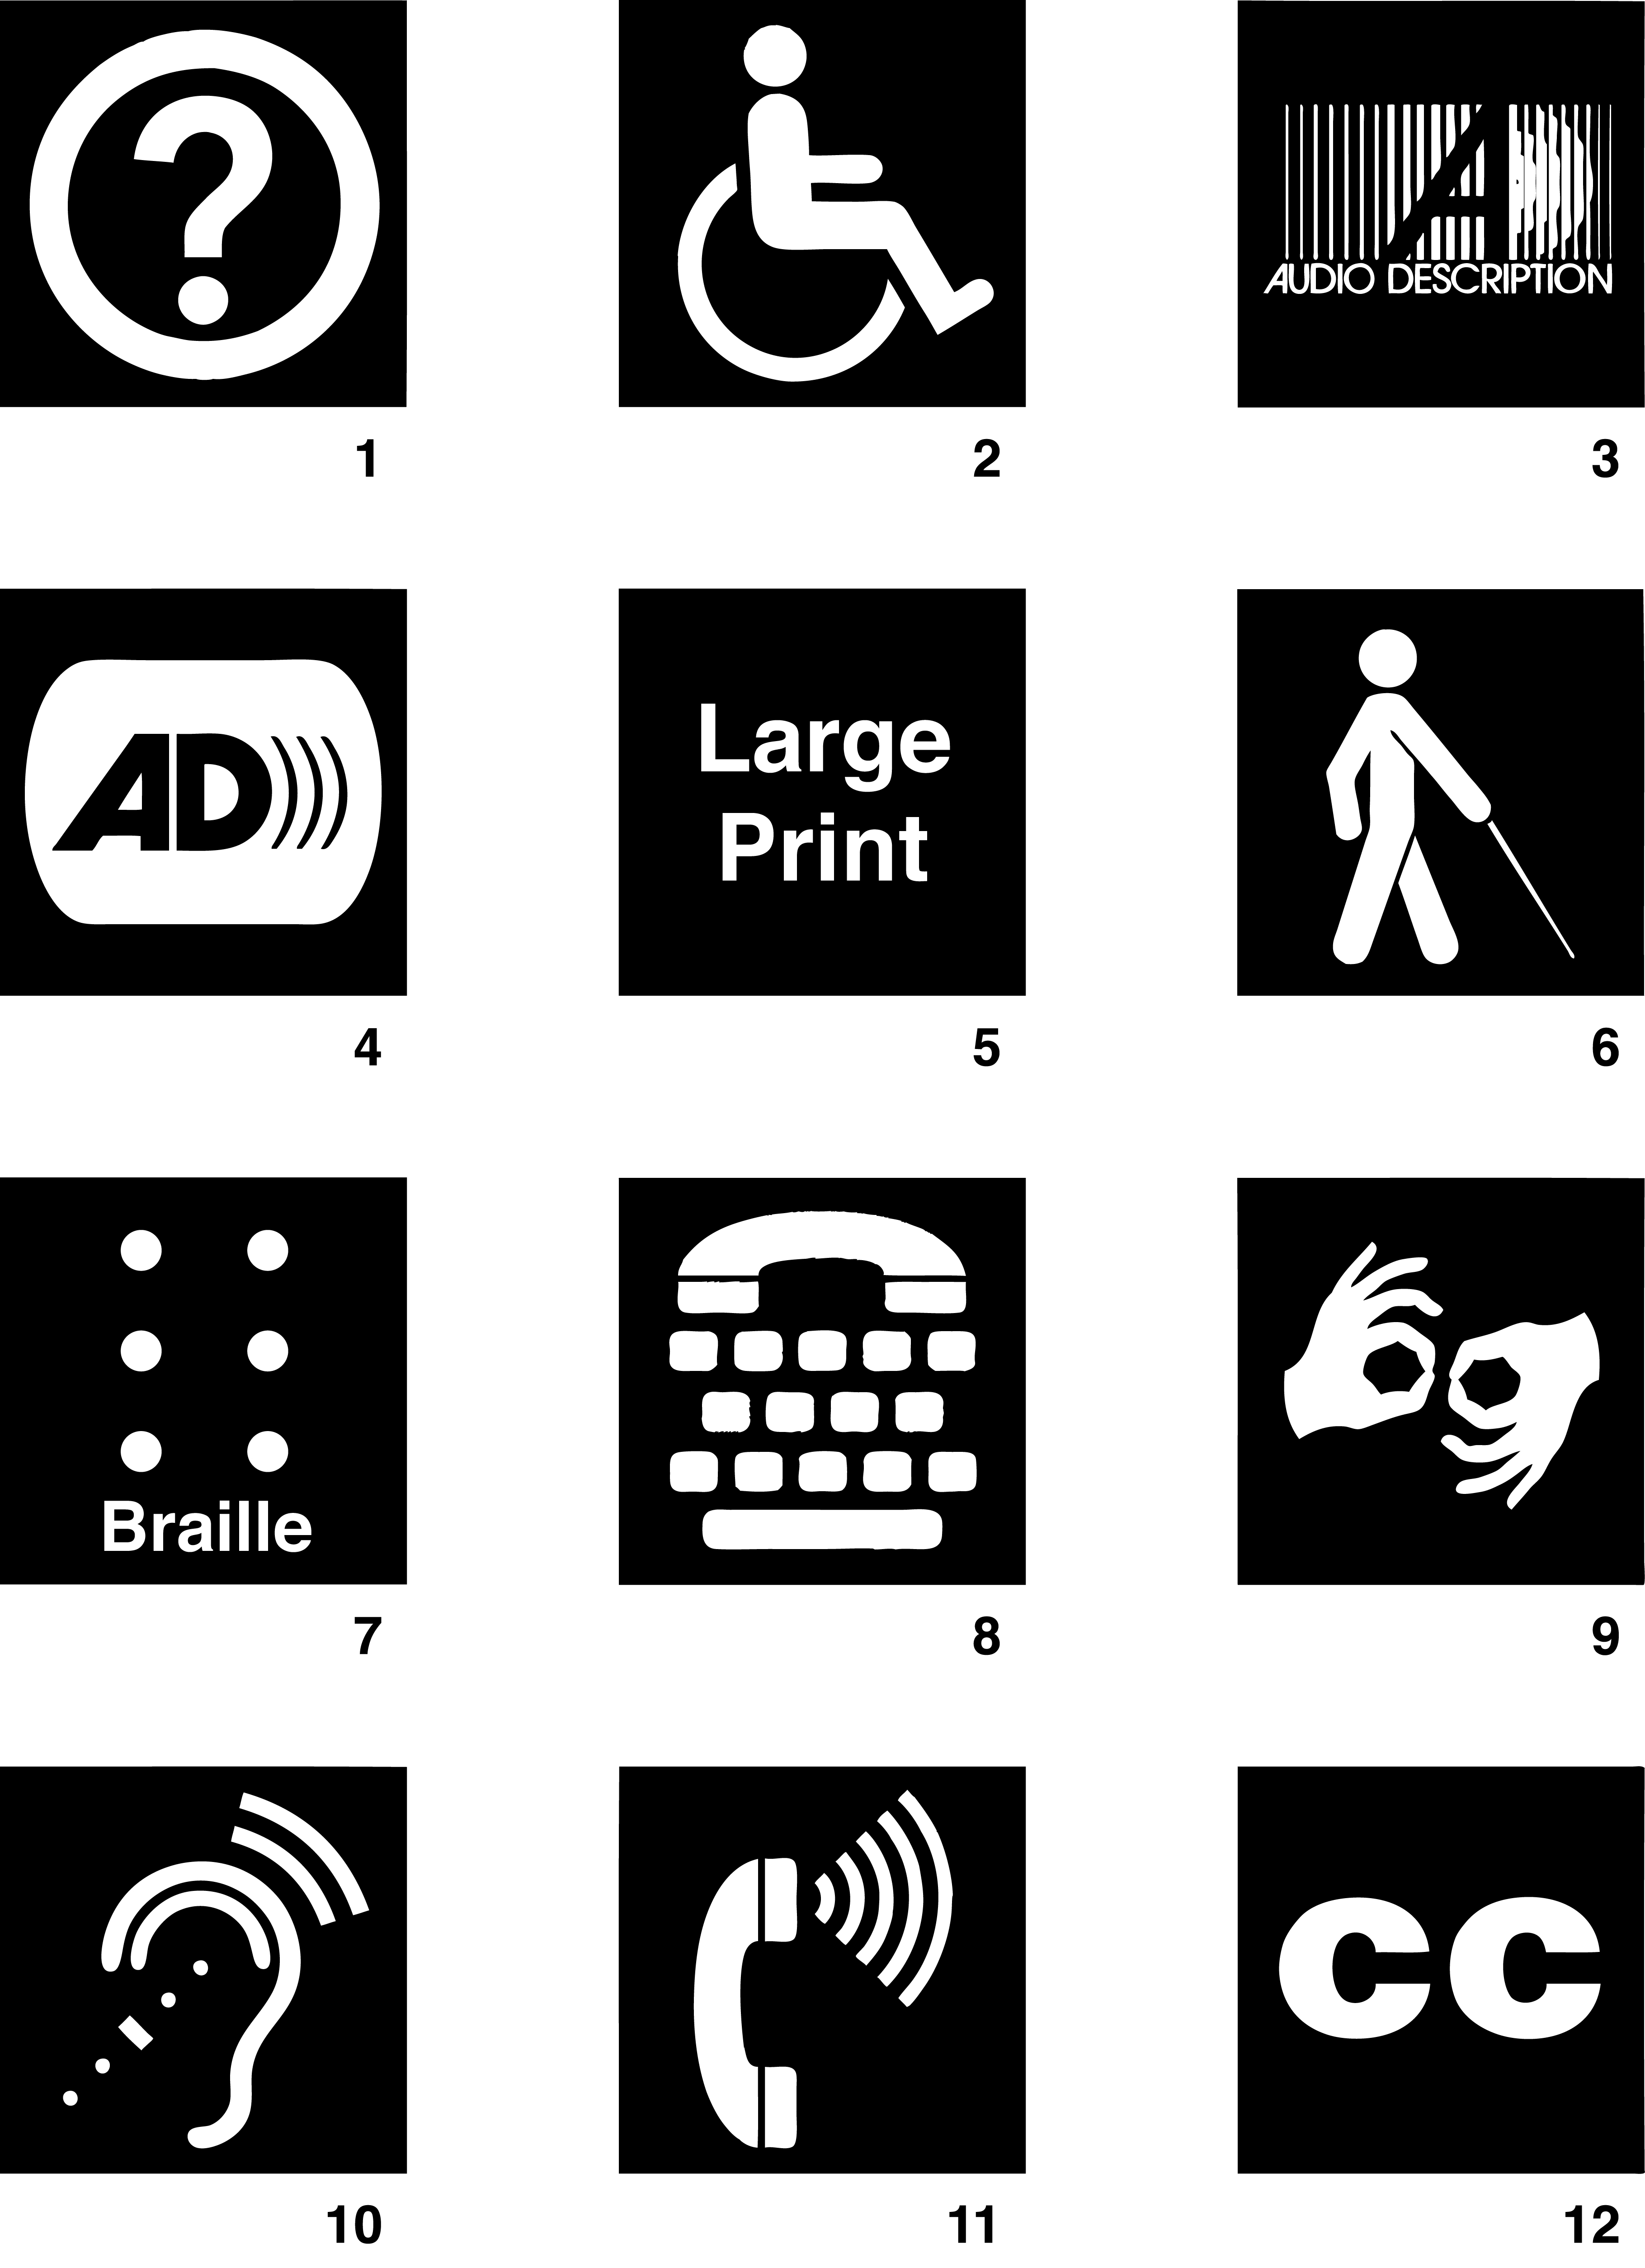 Signs & Symbols | Signs, Symbols, Pictograms & Infographics ...